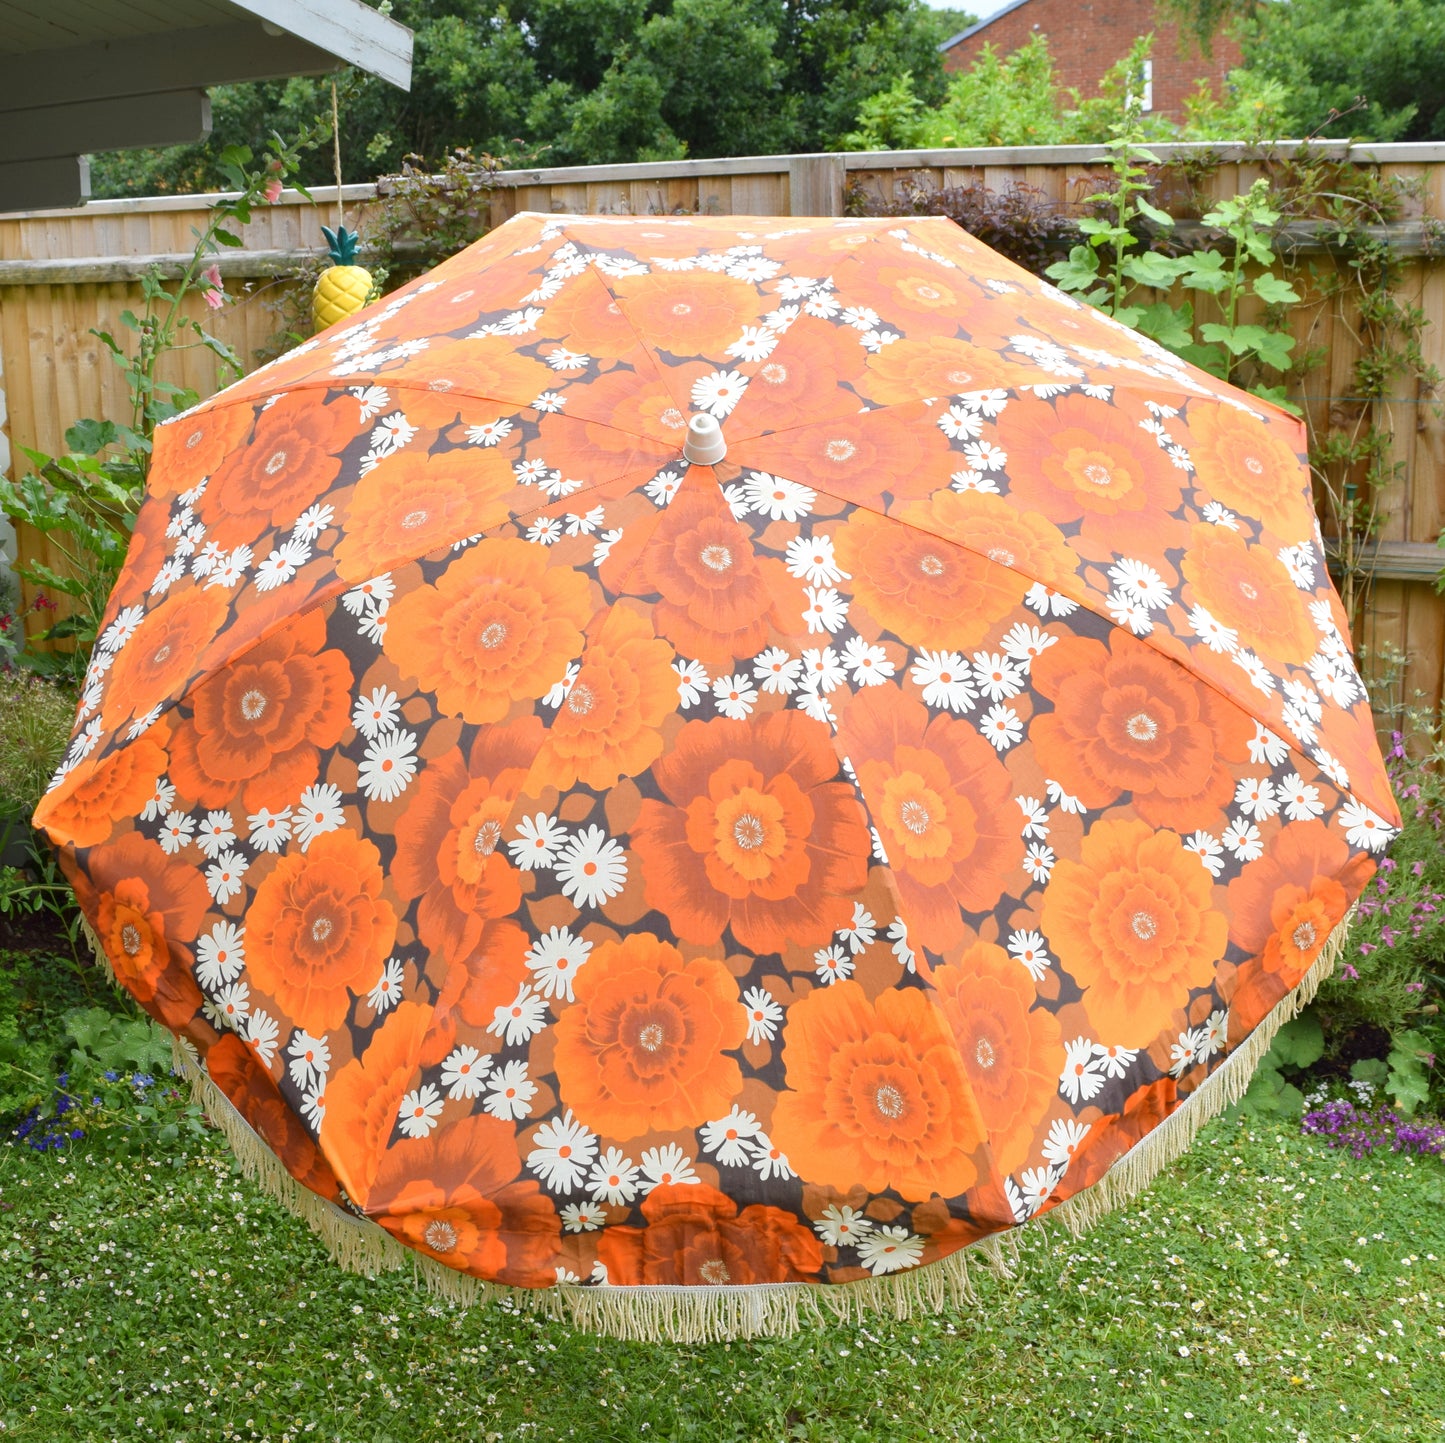 Vintage 1960s Large Folding Garden Parasol - Flower Power - Orange & Brown